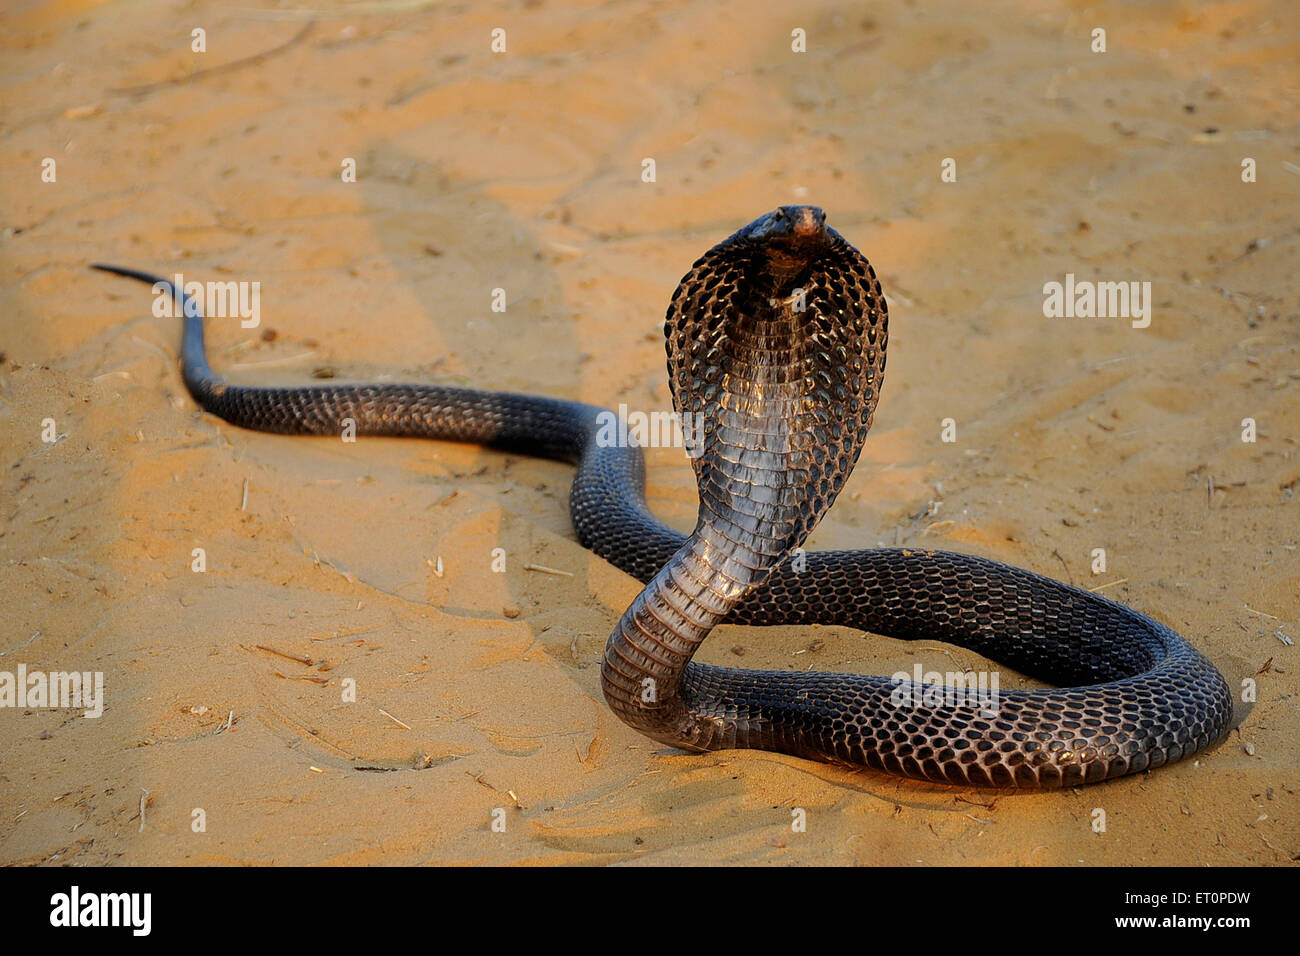 Cobra, cappuccio aperto, cobra indiana, cobra spettacolare, cobra asiatica, Cobra binocellata, serpente, rettile, Naja naja, Pushkar, Rajasthan, India Foto Stock